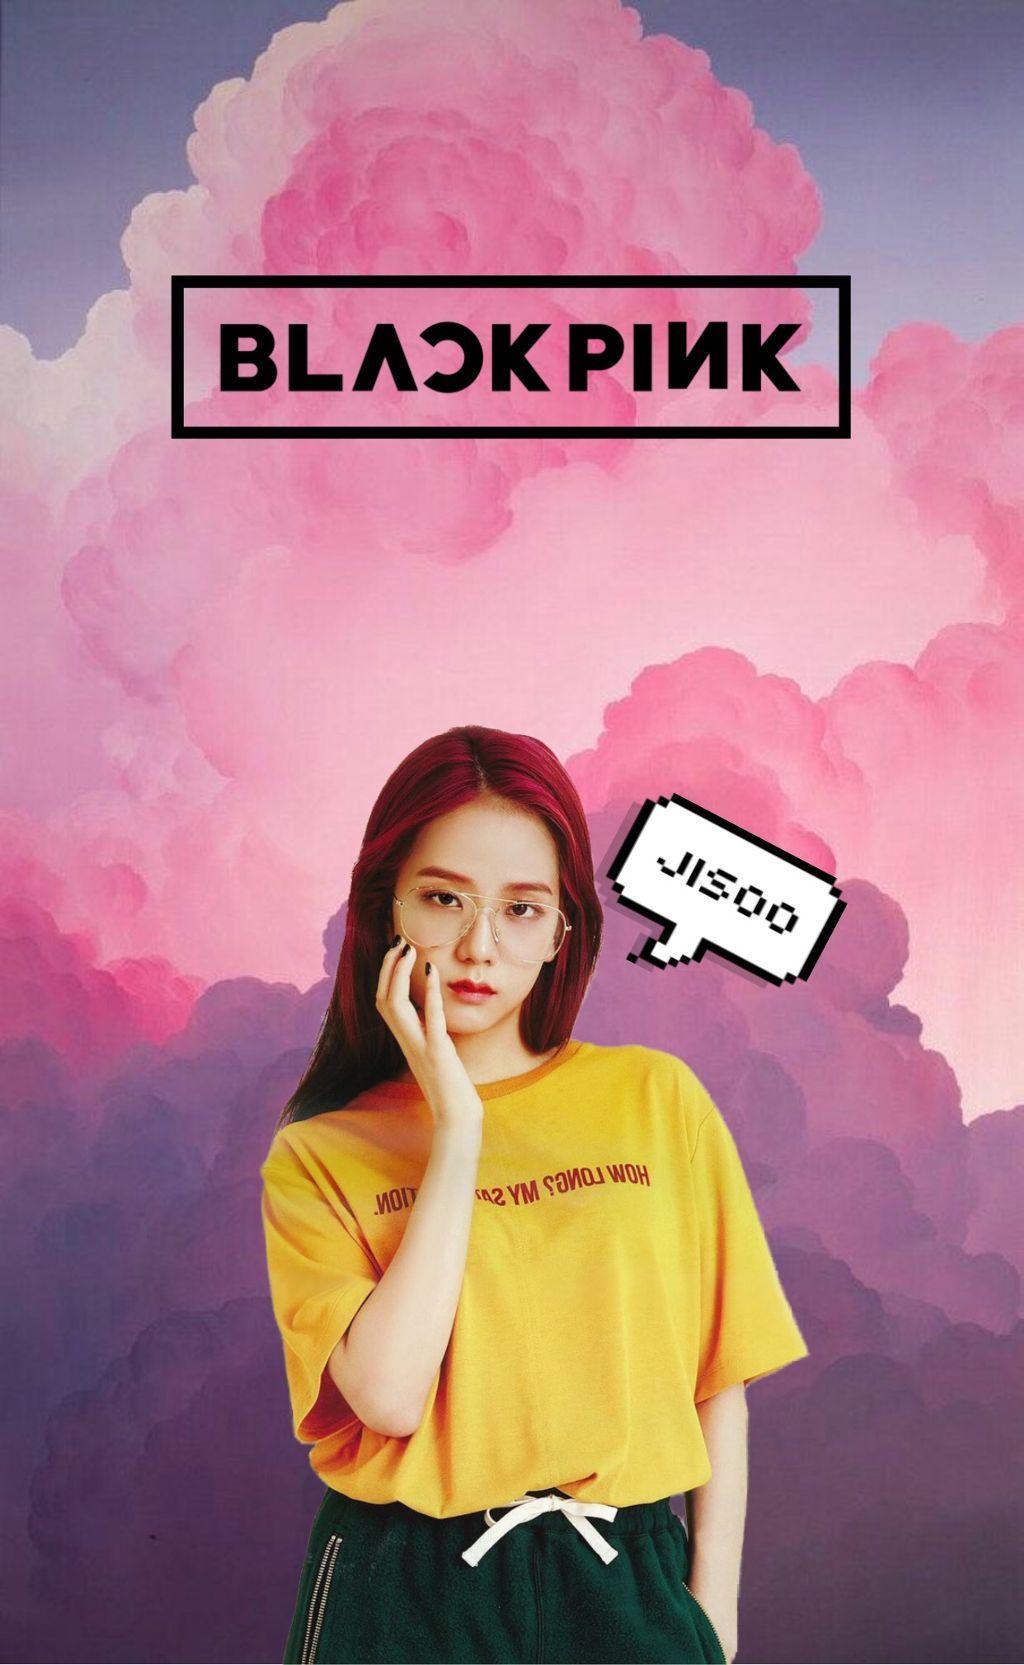 BLACKPINK Jisoo Wallpapers - Top Free BLACKPINK Jisoo Backgrounds ...